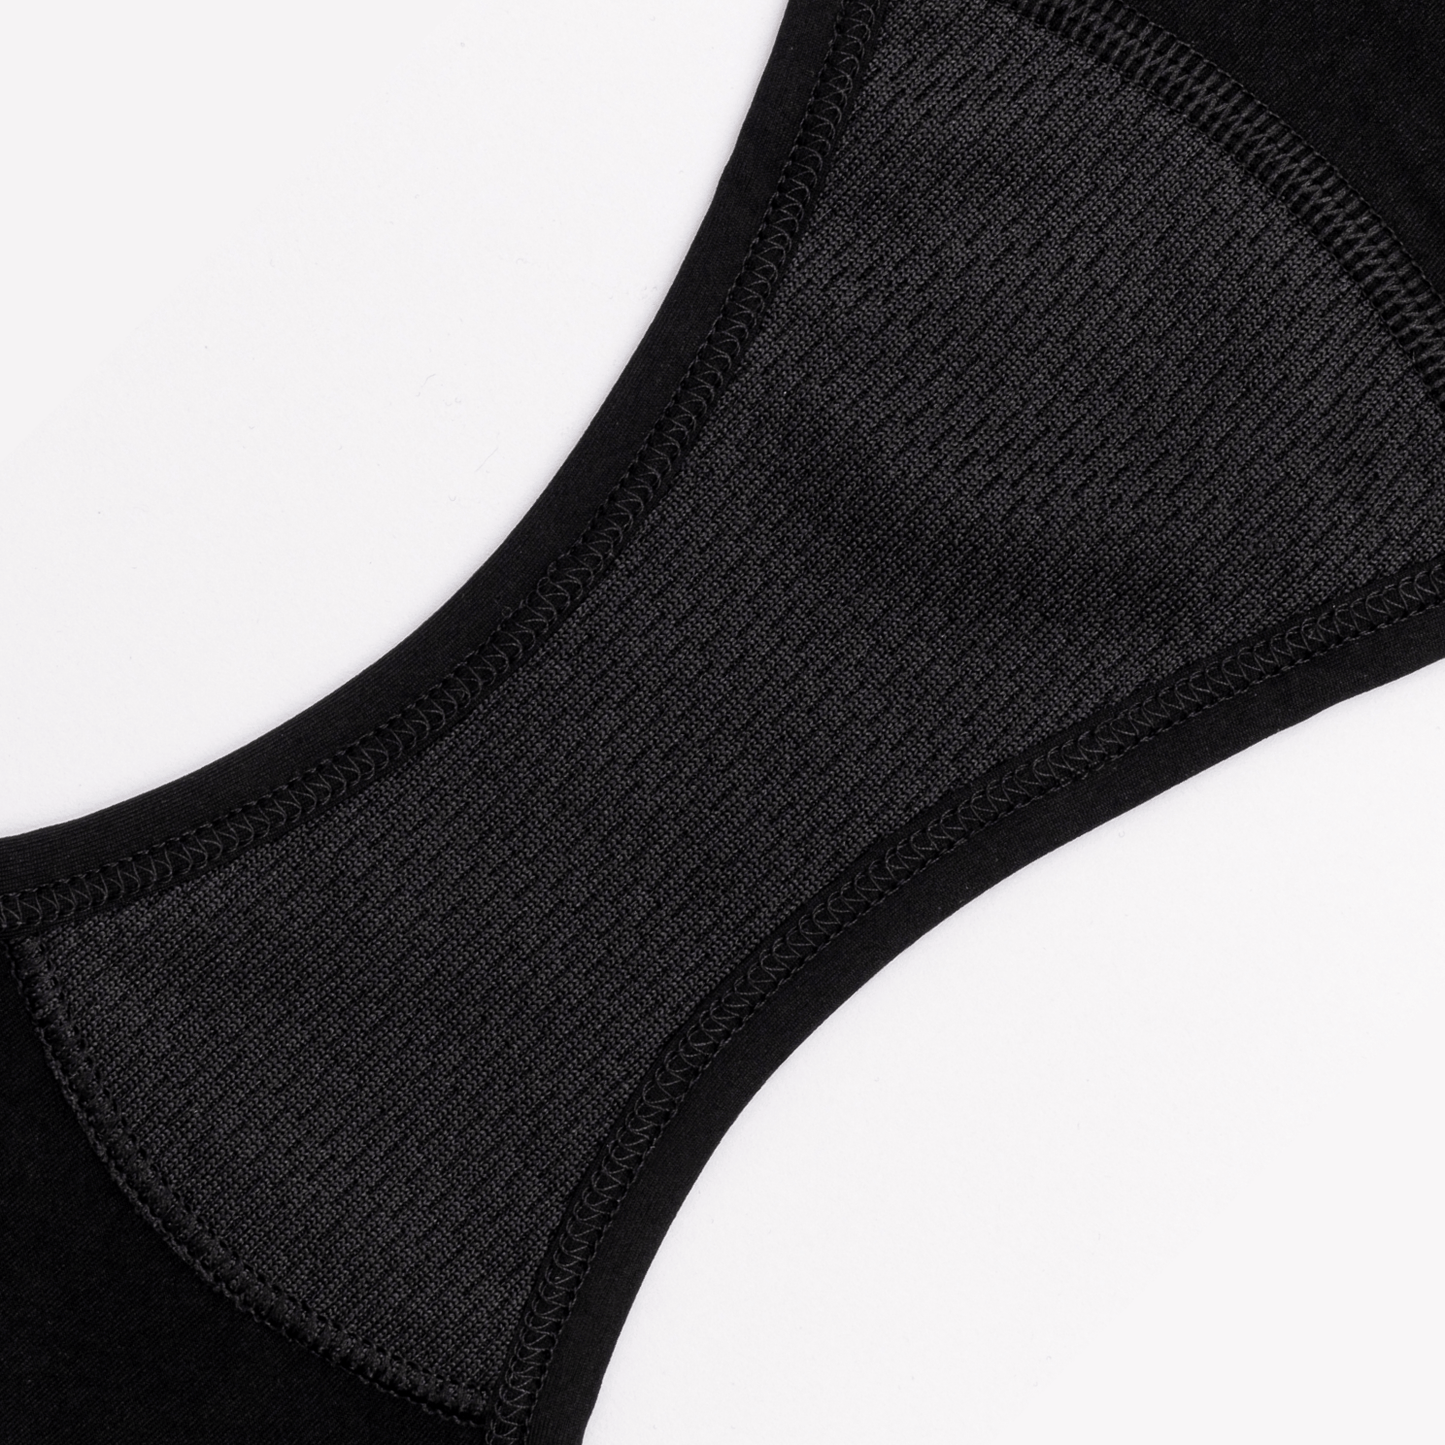 Discharge panties - Classic - Recycled Nylon - Black